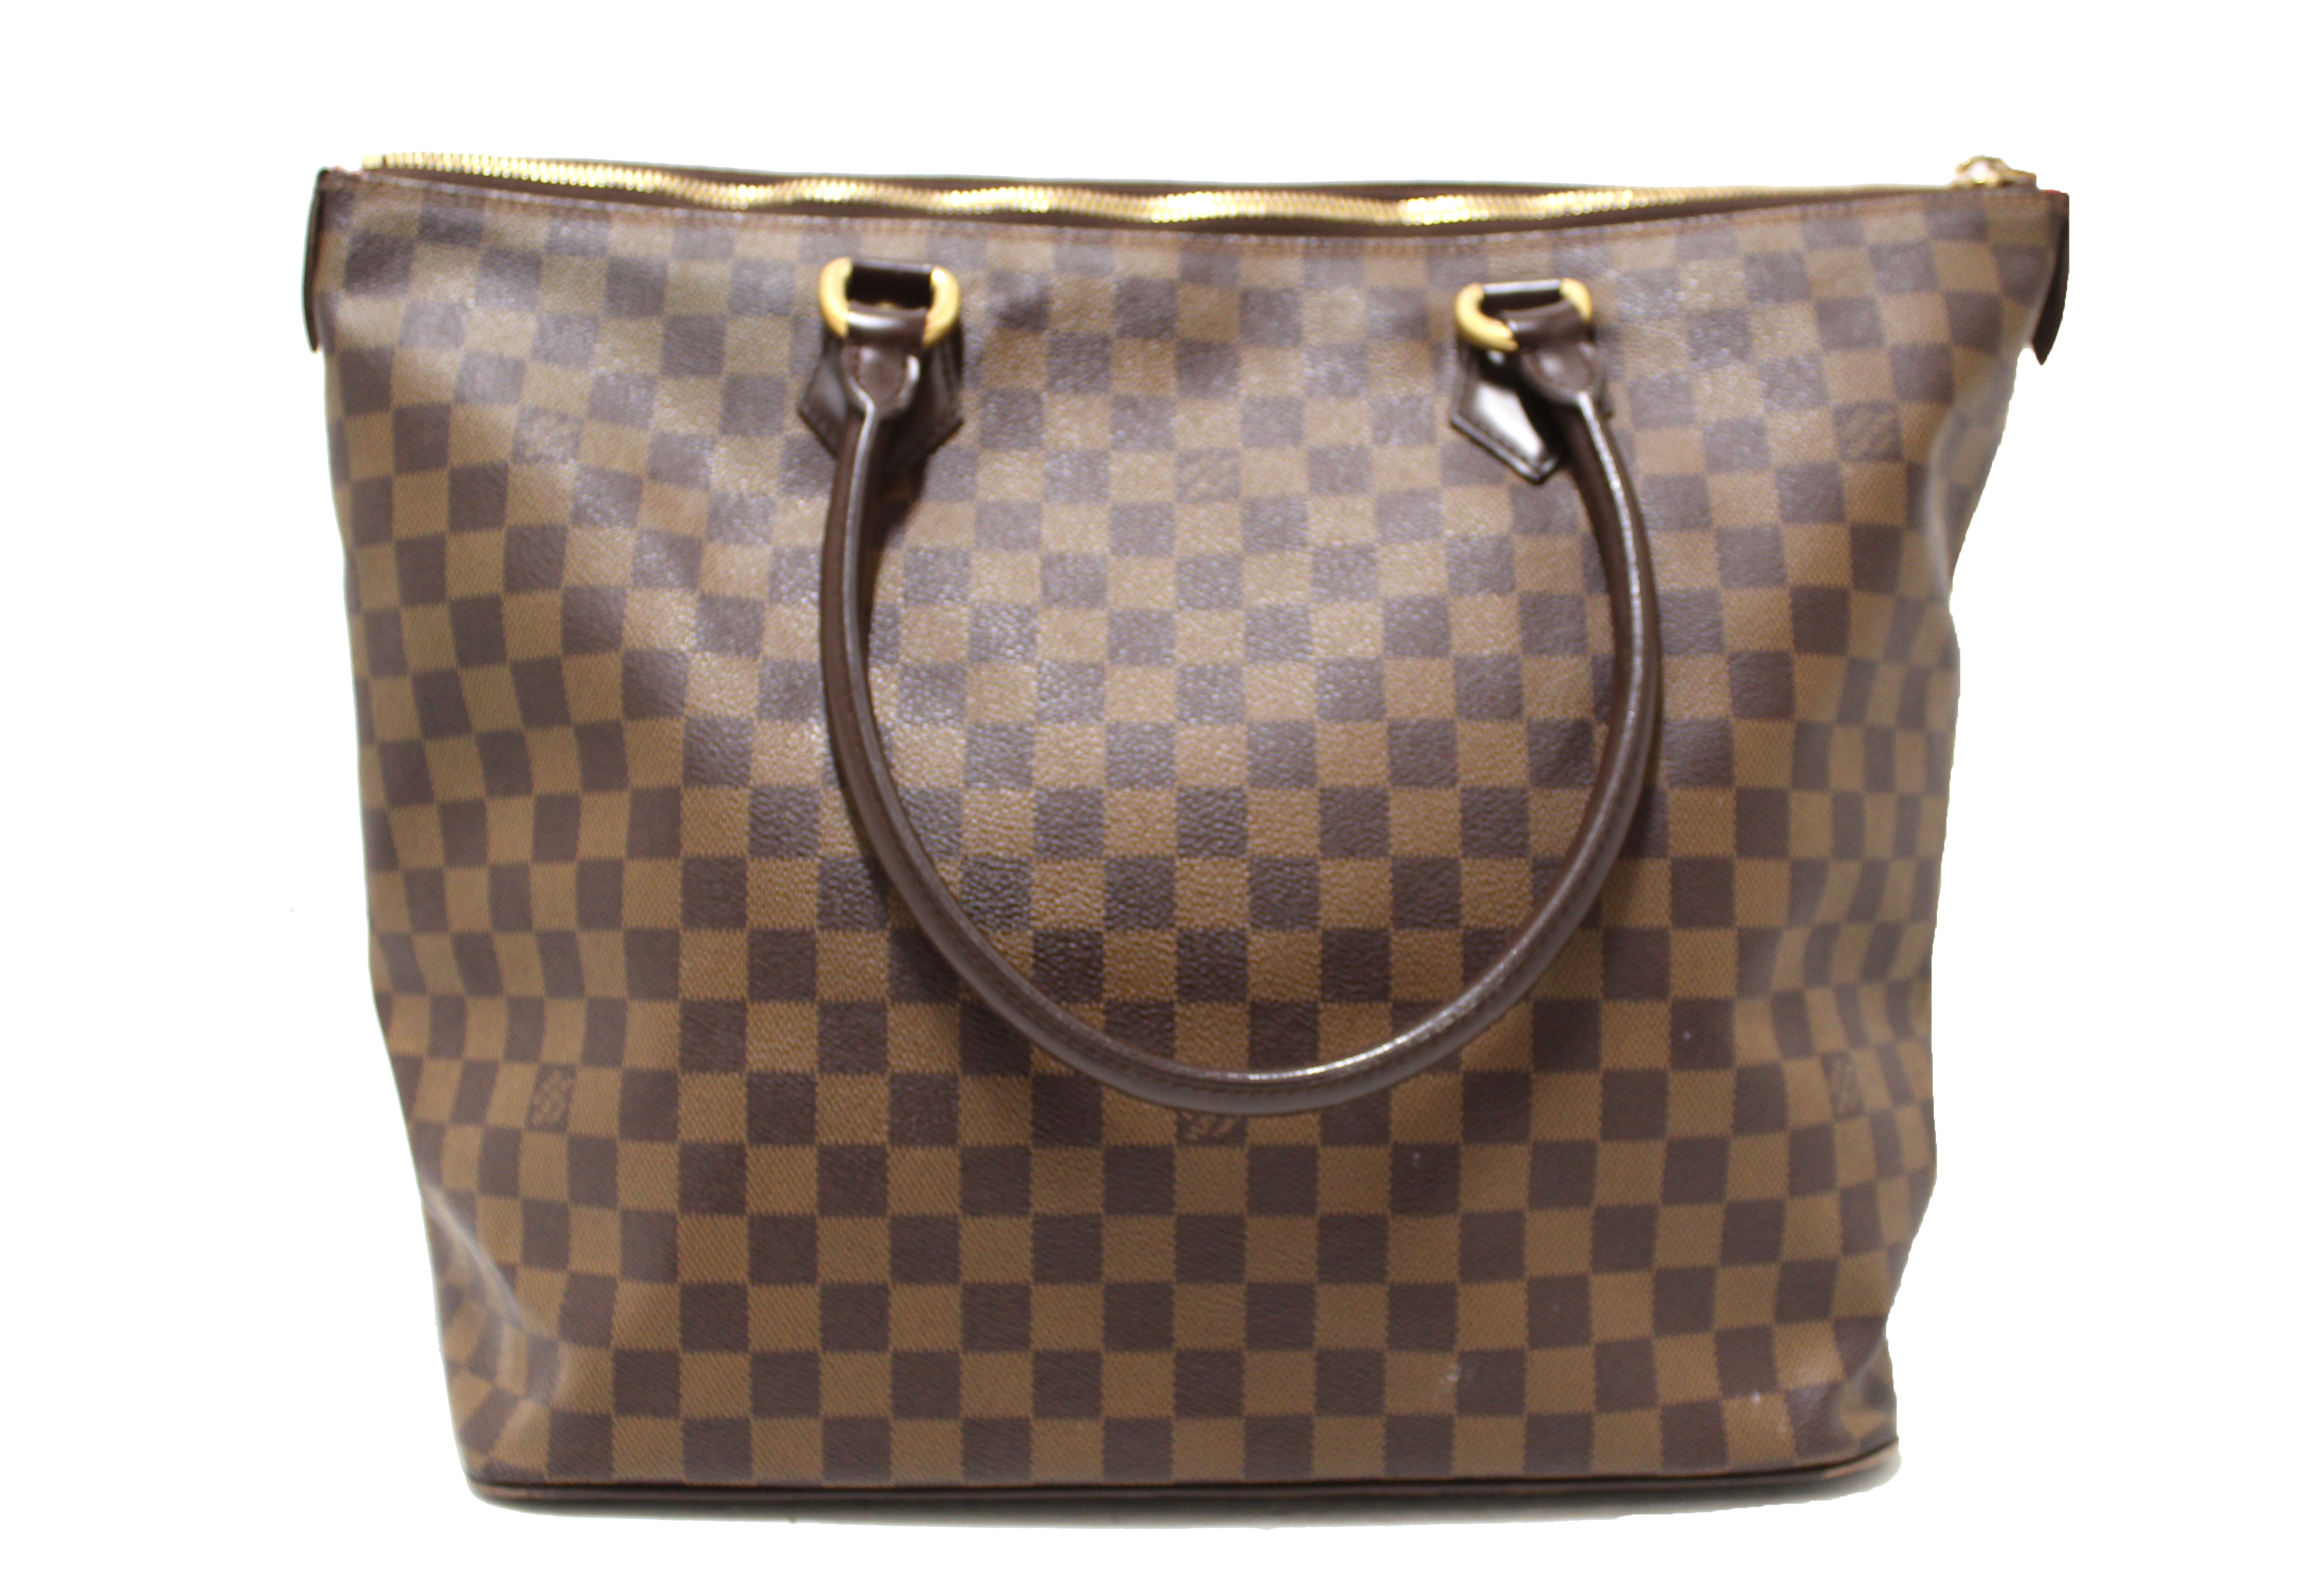 Authentic Louis Vuitton Saleya MM Damier Ebene Tote bag Shoulder